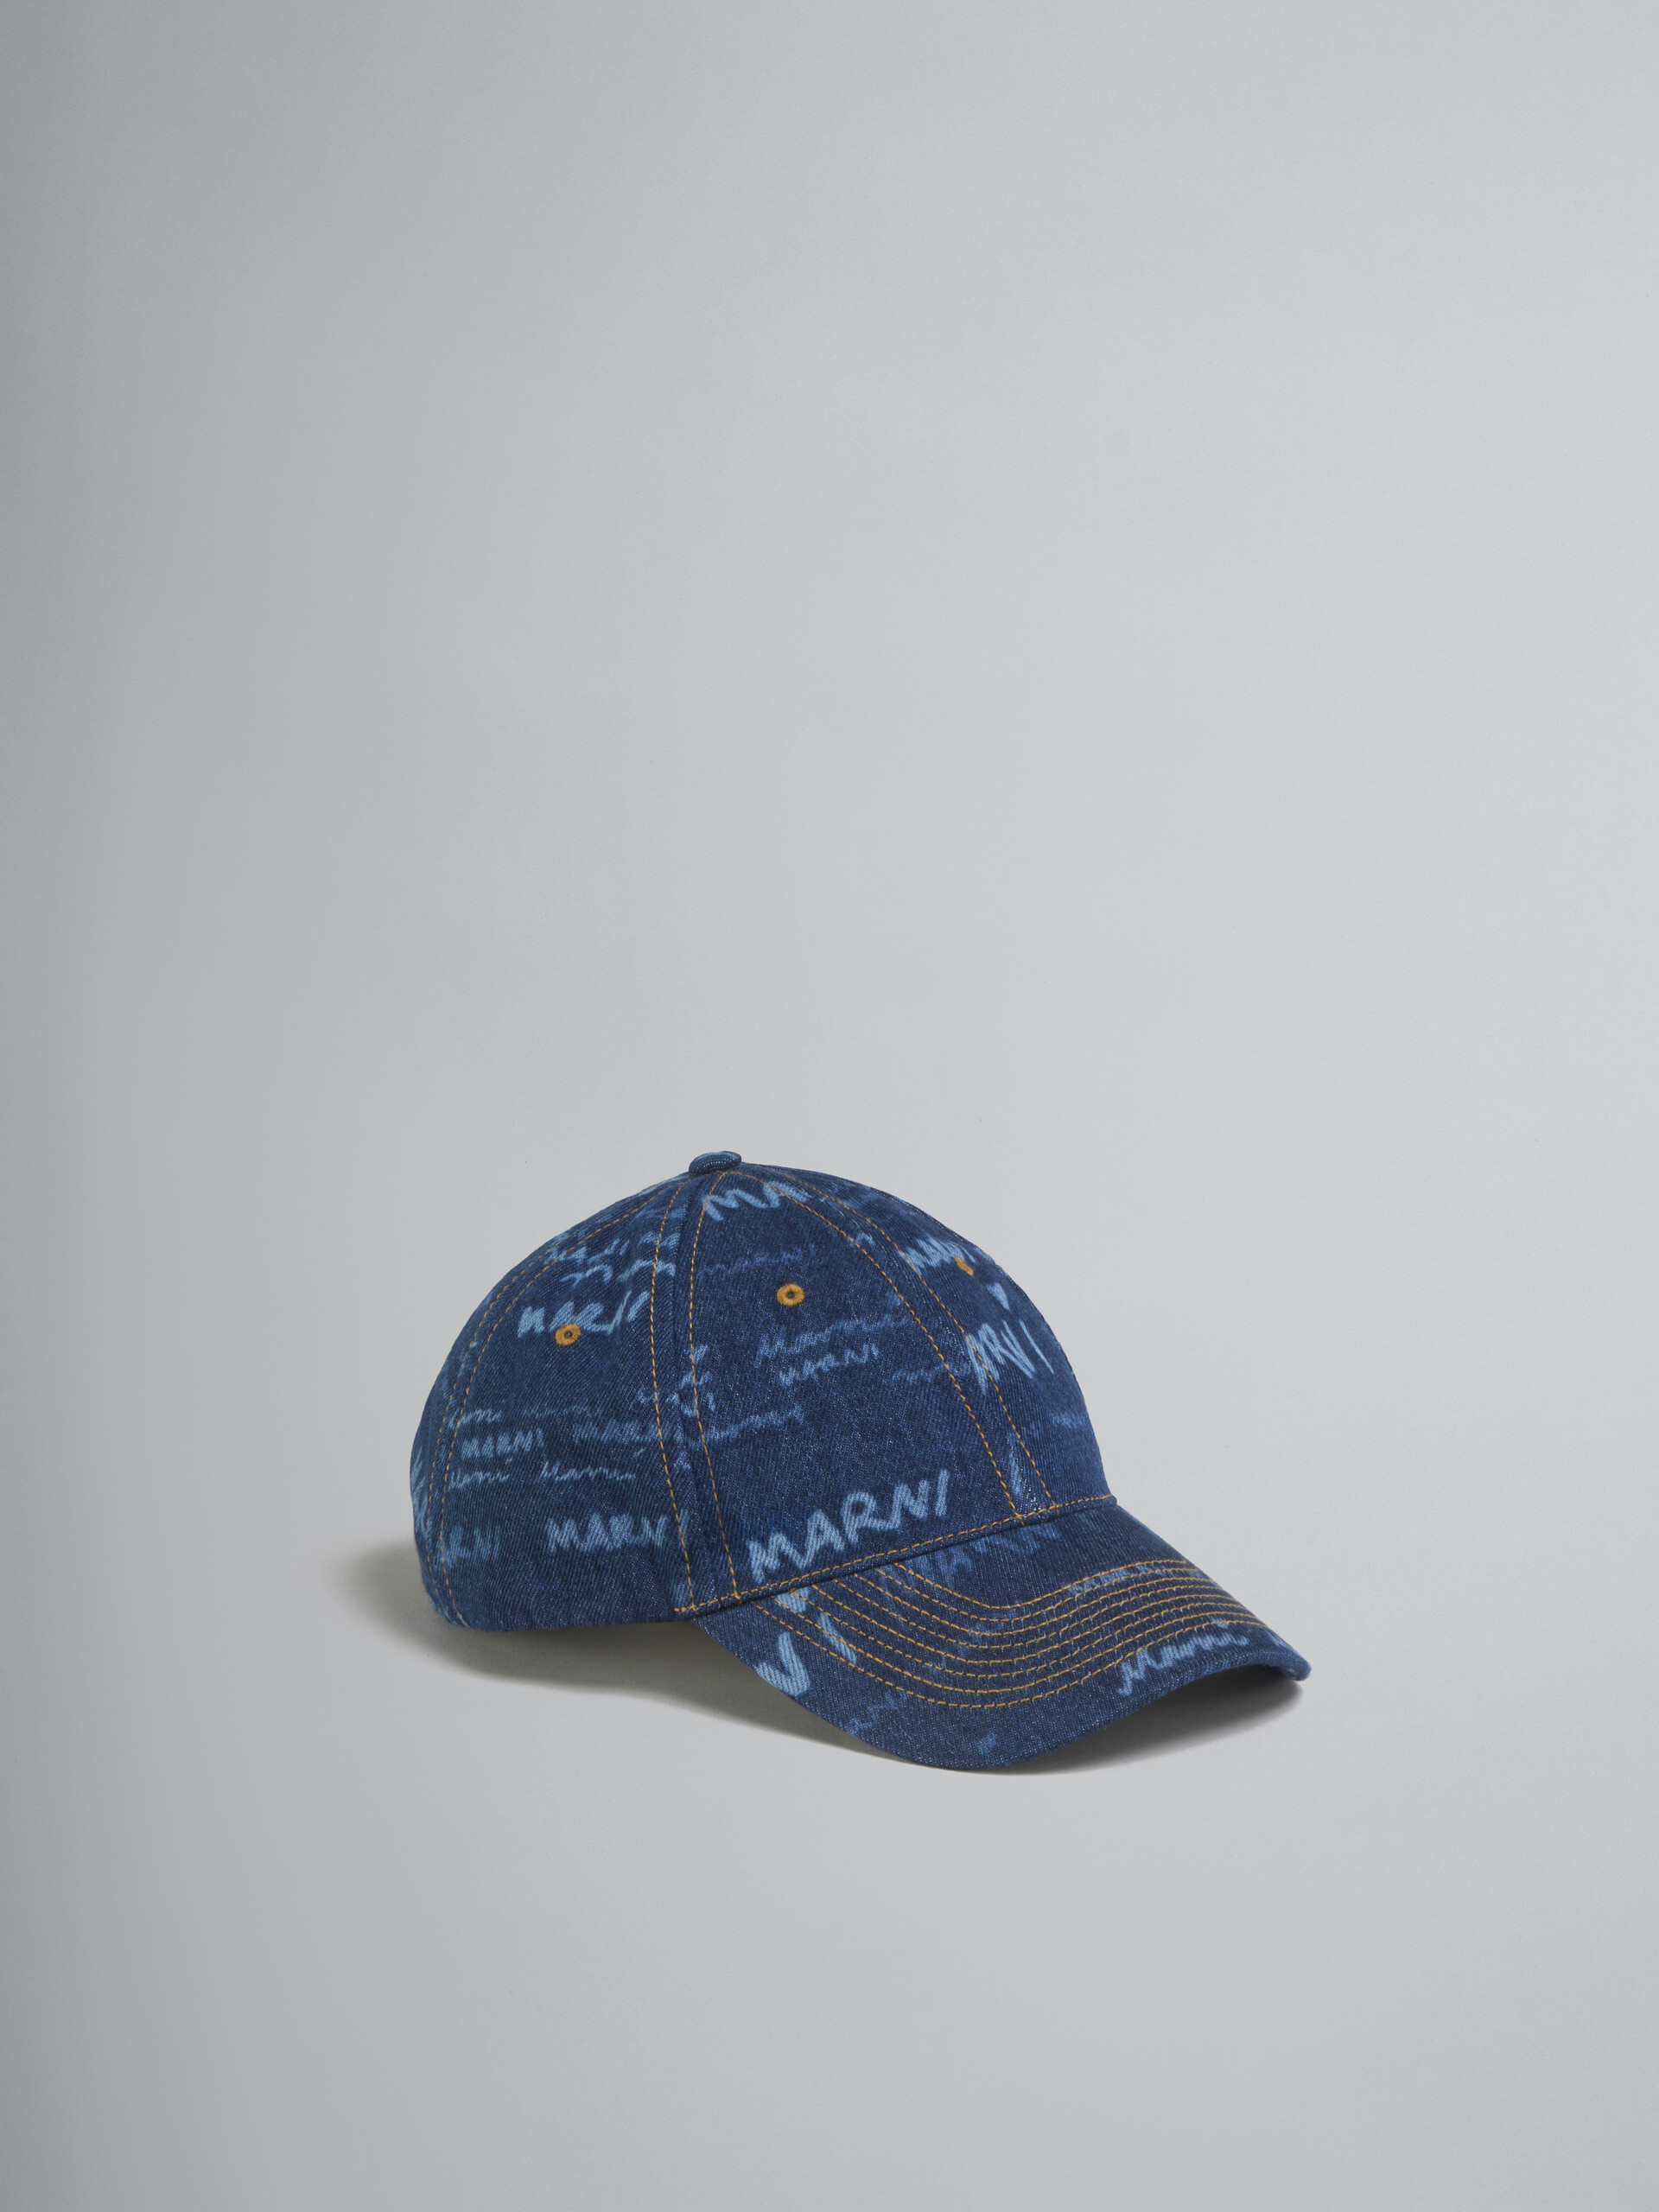 Blue denim baseball cap with Mega Marni motif - Hats - Image 1